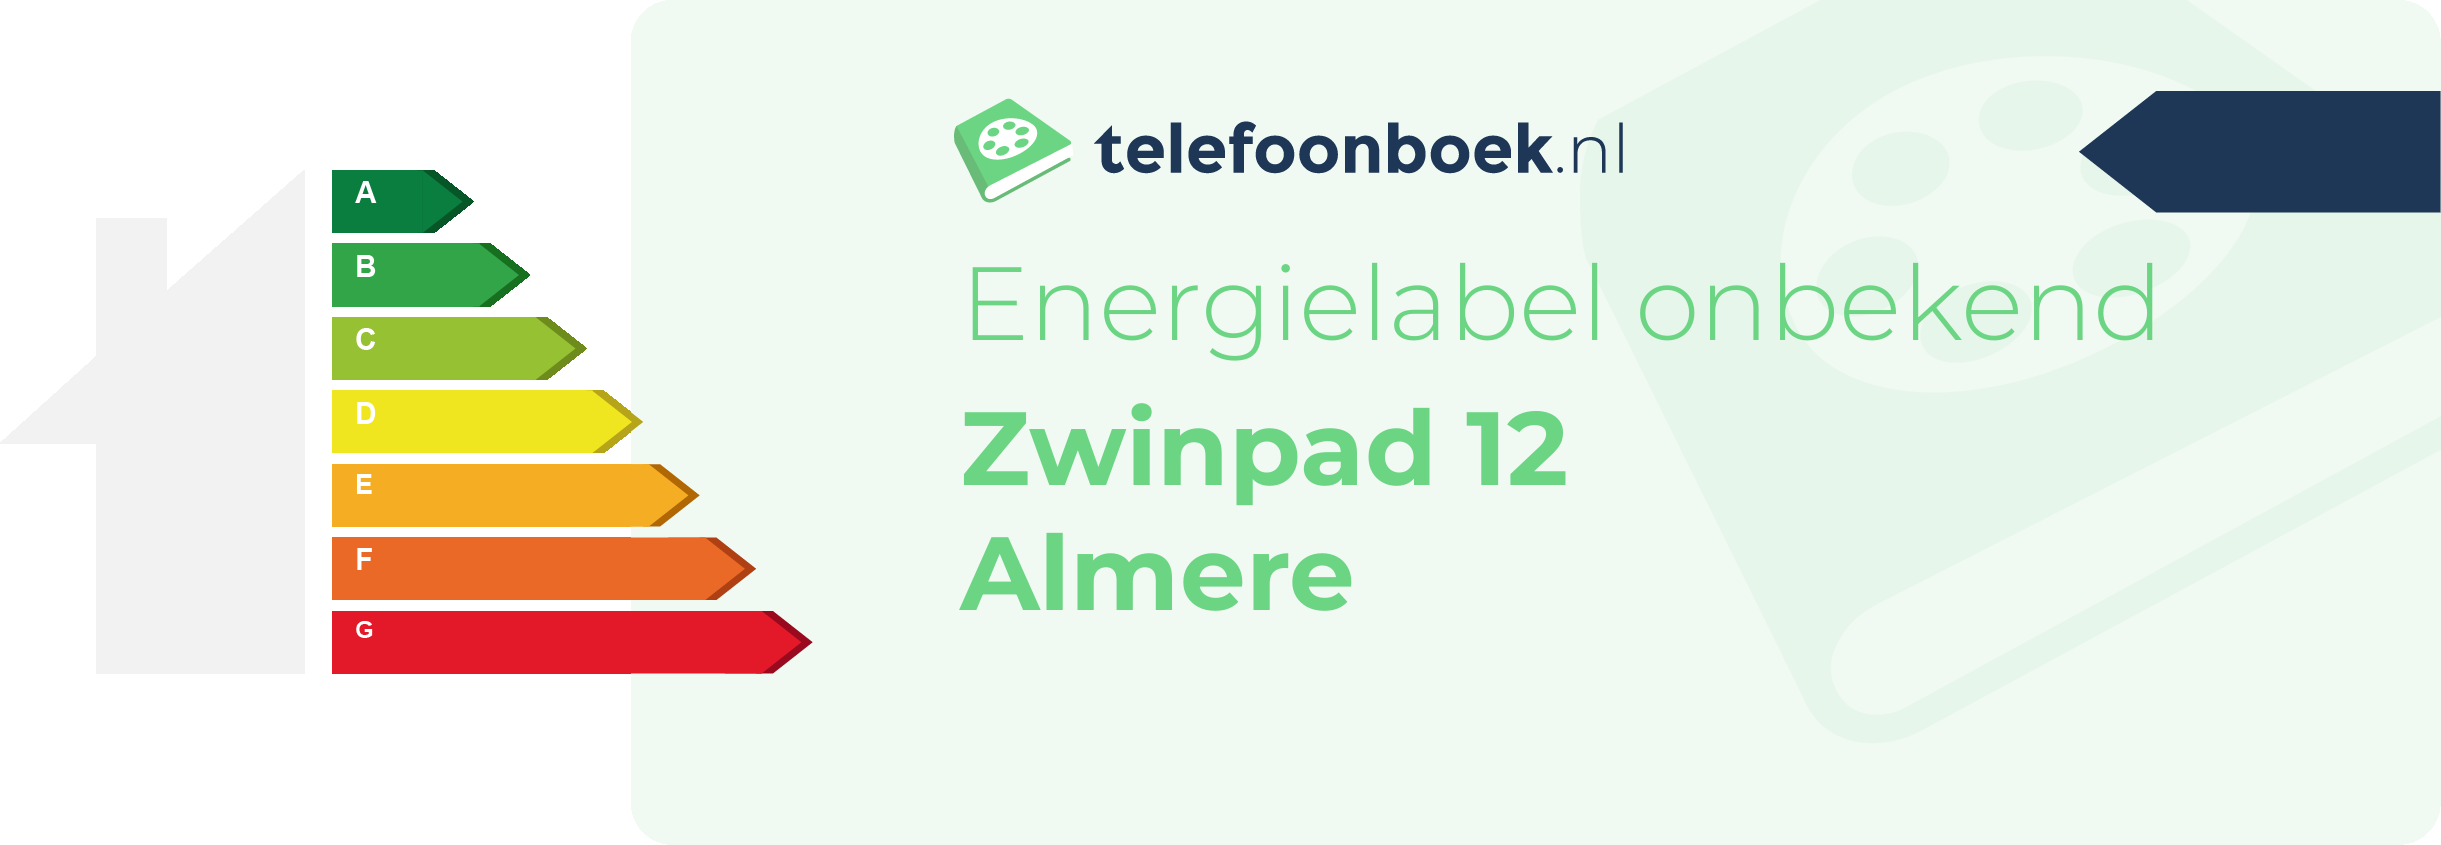 Energielabel Zwinpad 12 Almere